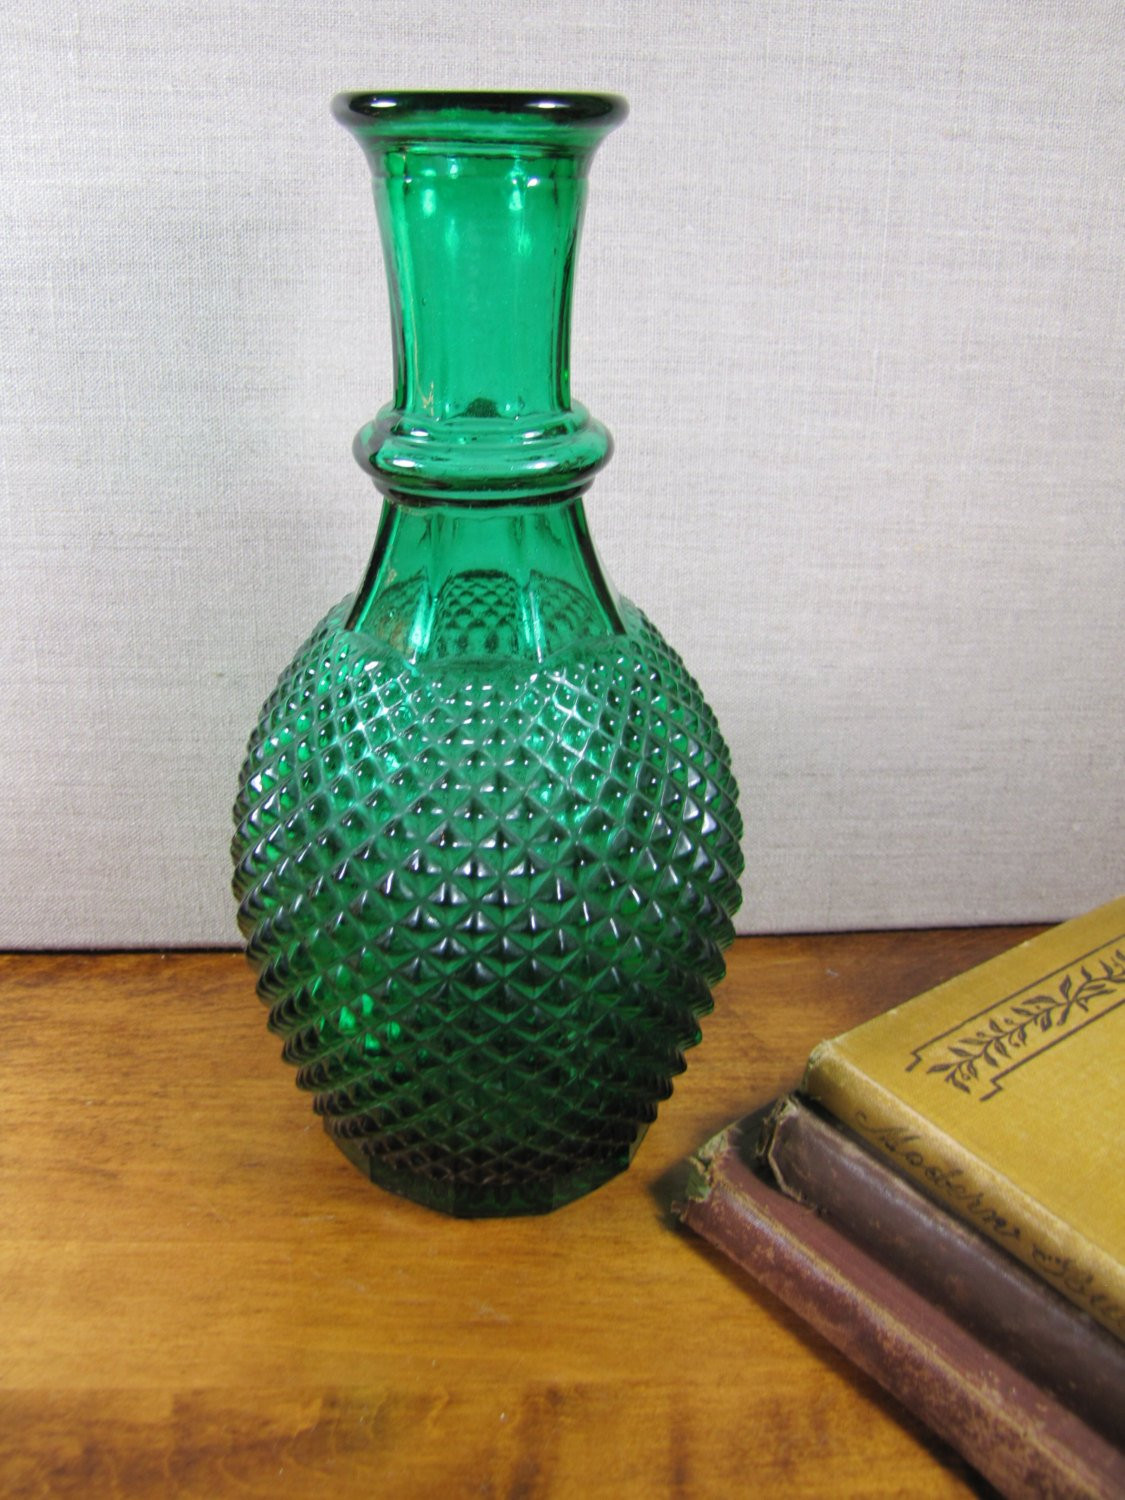 16 Famous Green Glass Bottle Vase 2022 free download green glass bottle vase of emerald green glass vase diamond shaped paneled throughout dc29fc294c28ezoom